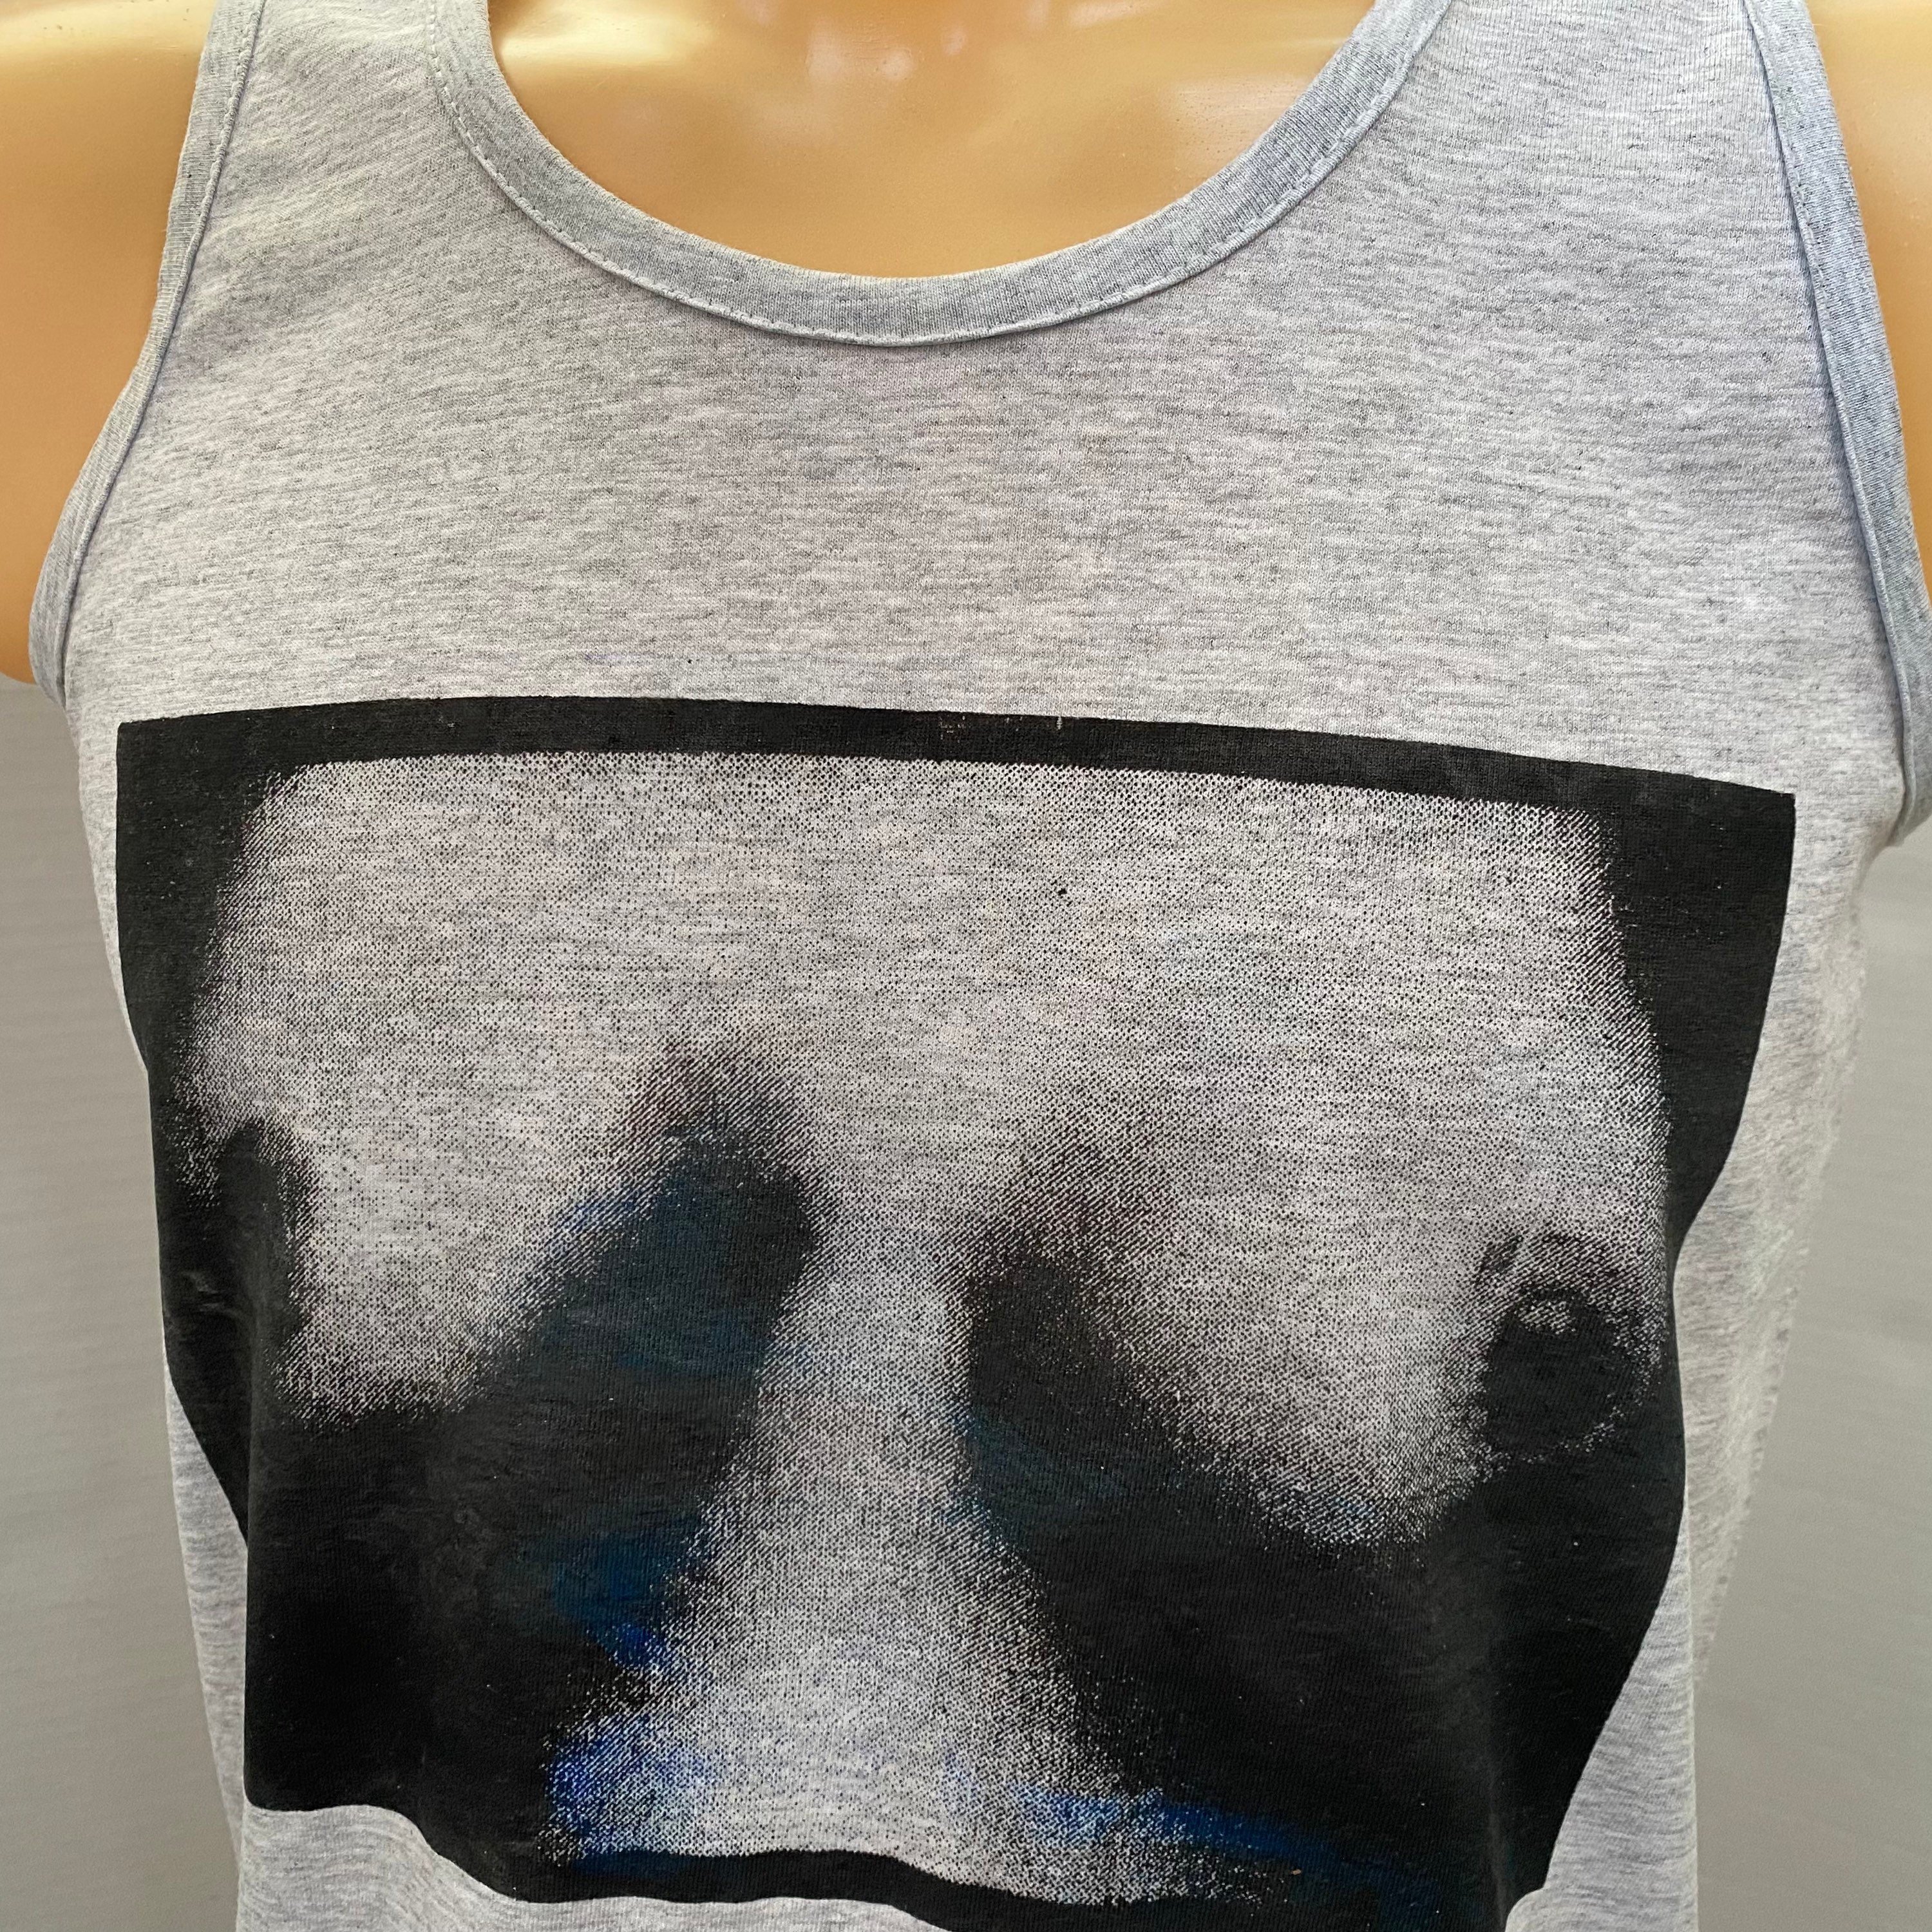 Breast VEST Shirt Punk Boobs Tit Print Tank alternative Gym Sports